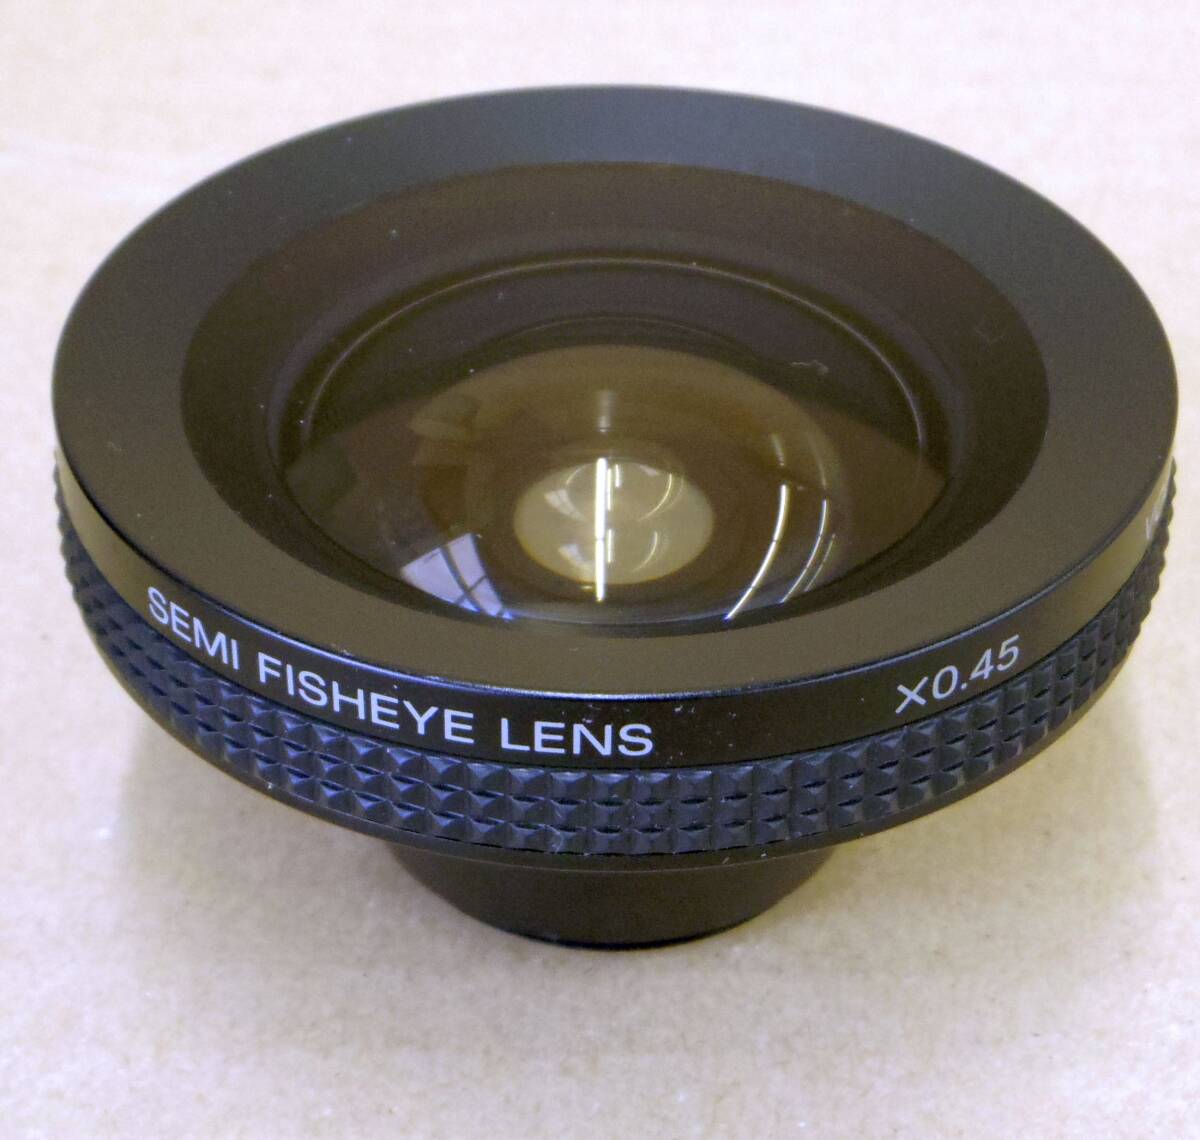 * free shipping * SONY VCL-0437 ×0.45 SEMI FISHEYE LENS wide converter wide-angle lens fish eye lens 